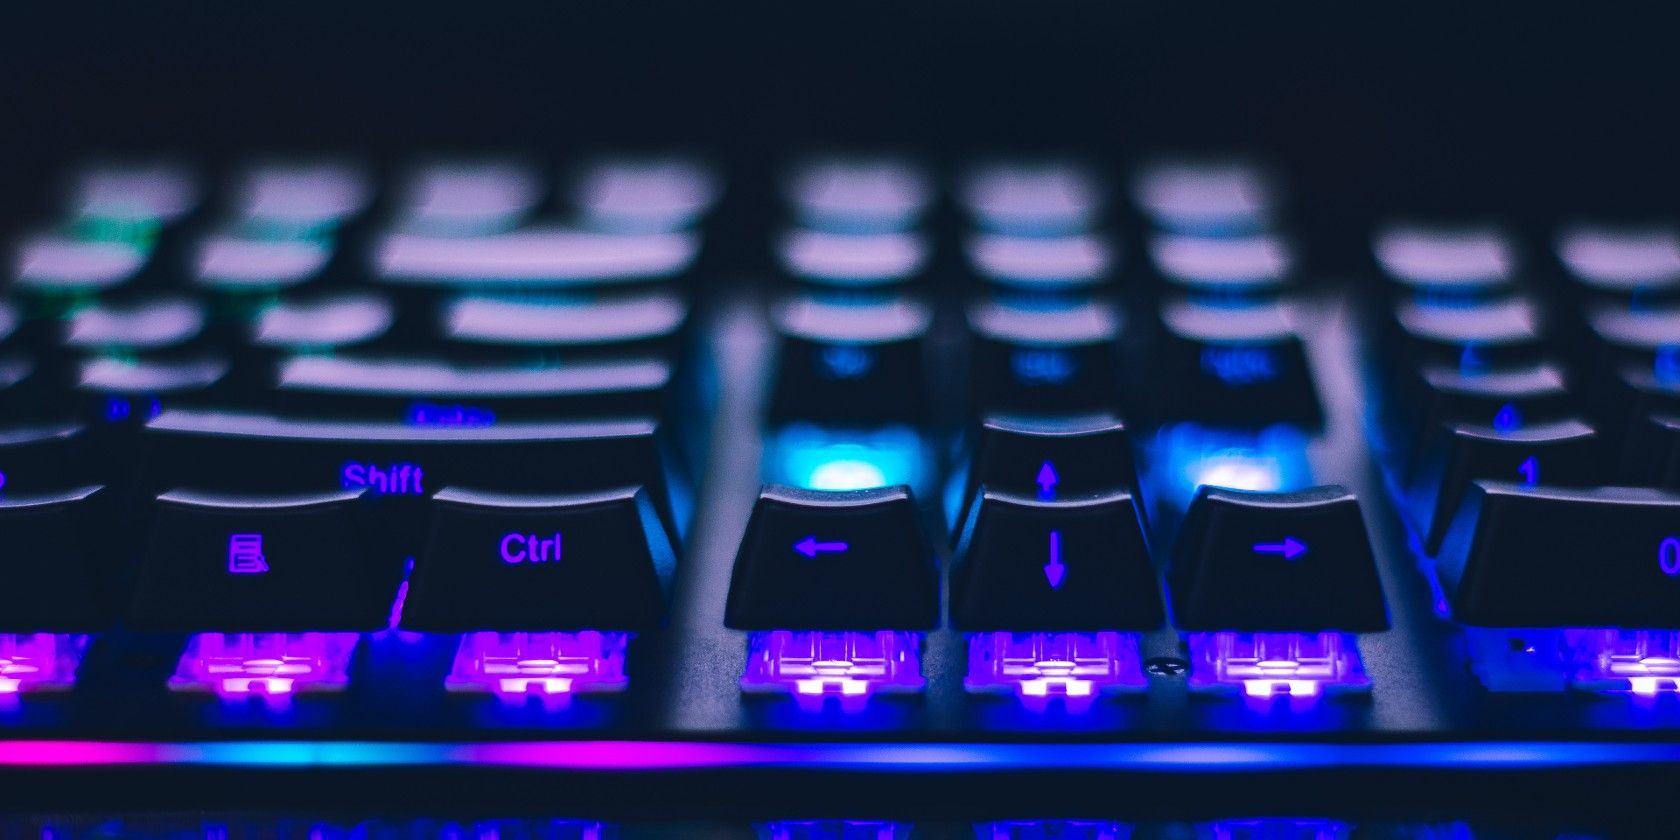 Backlit keyboard in the dark